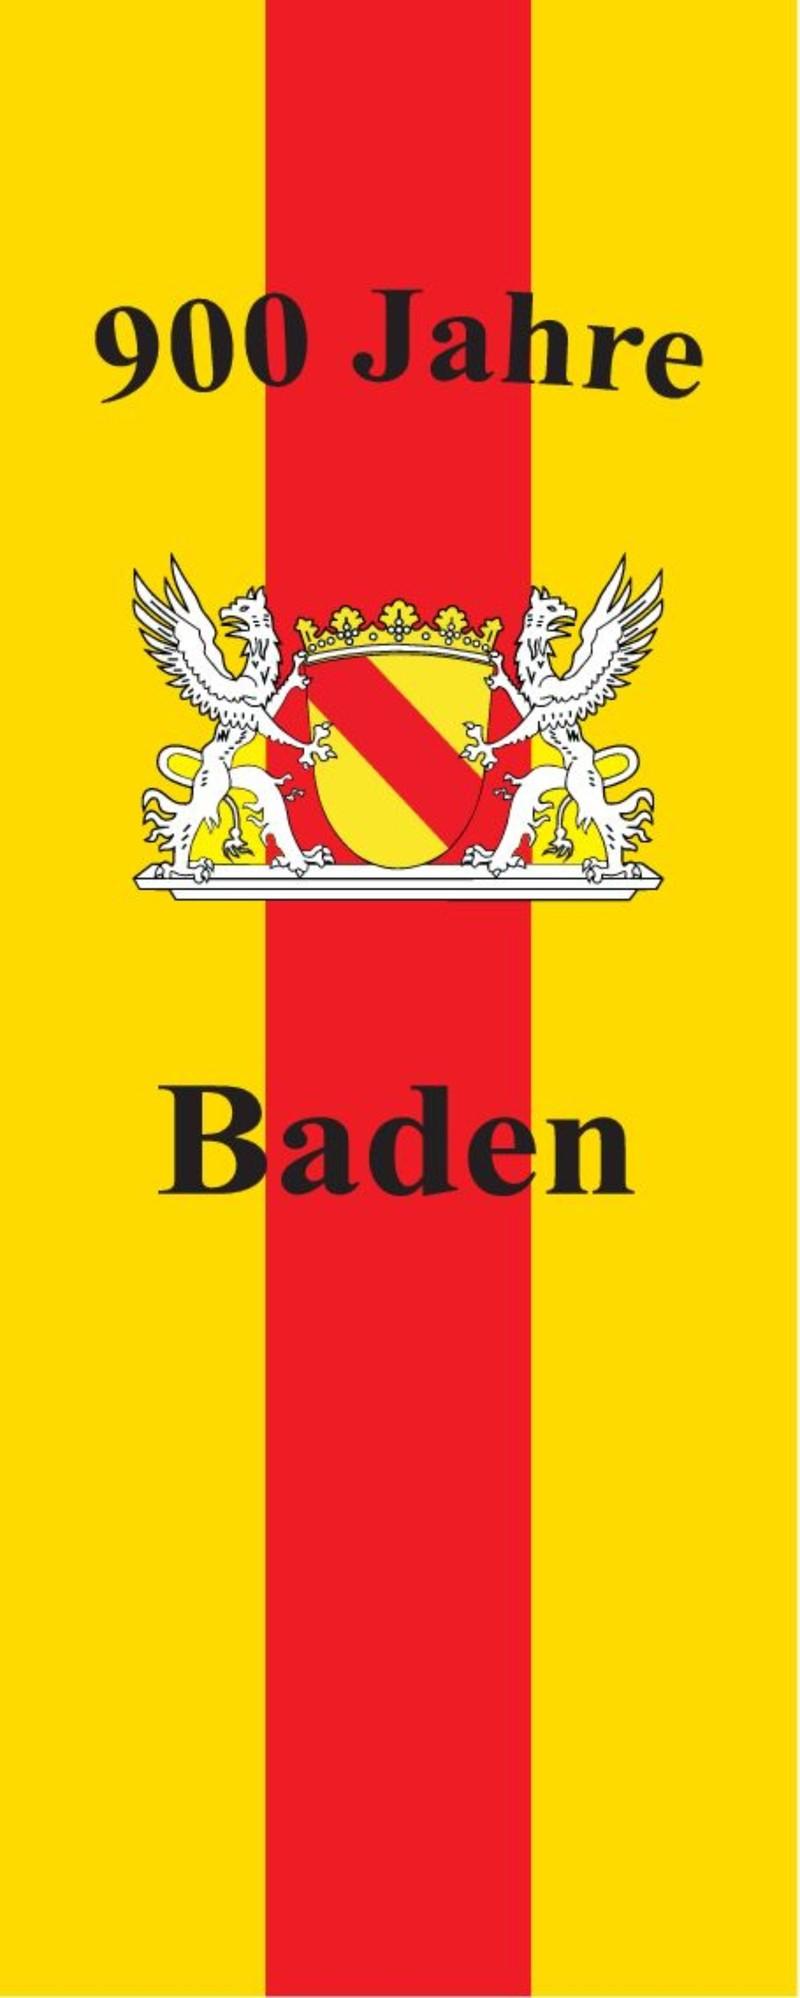 Hissflagge "900 Jahre Baden", 120 x 300cm